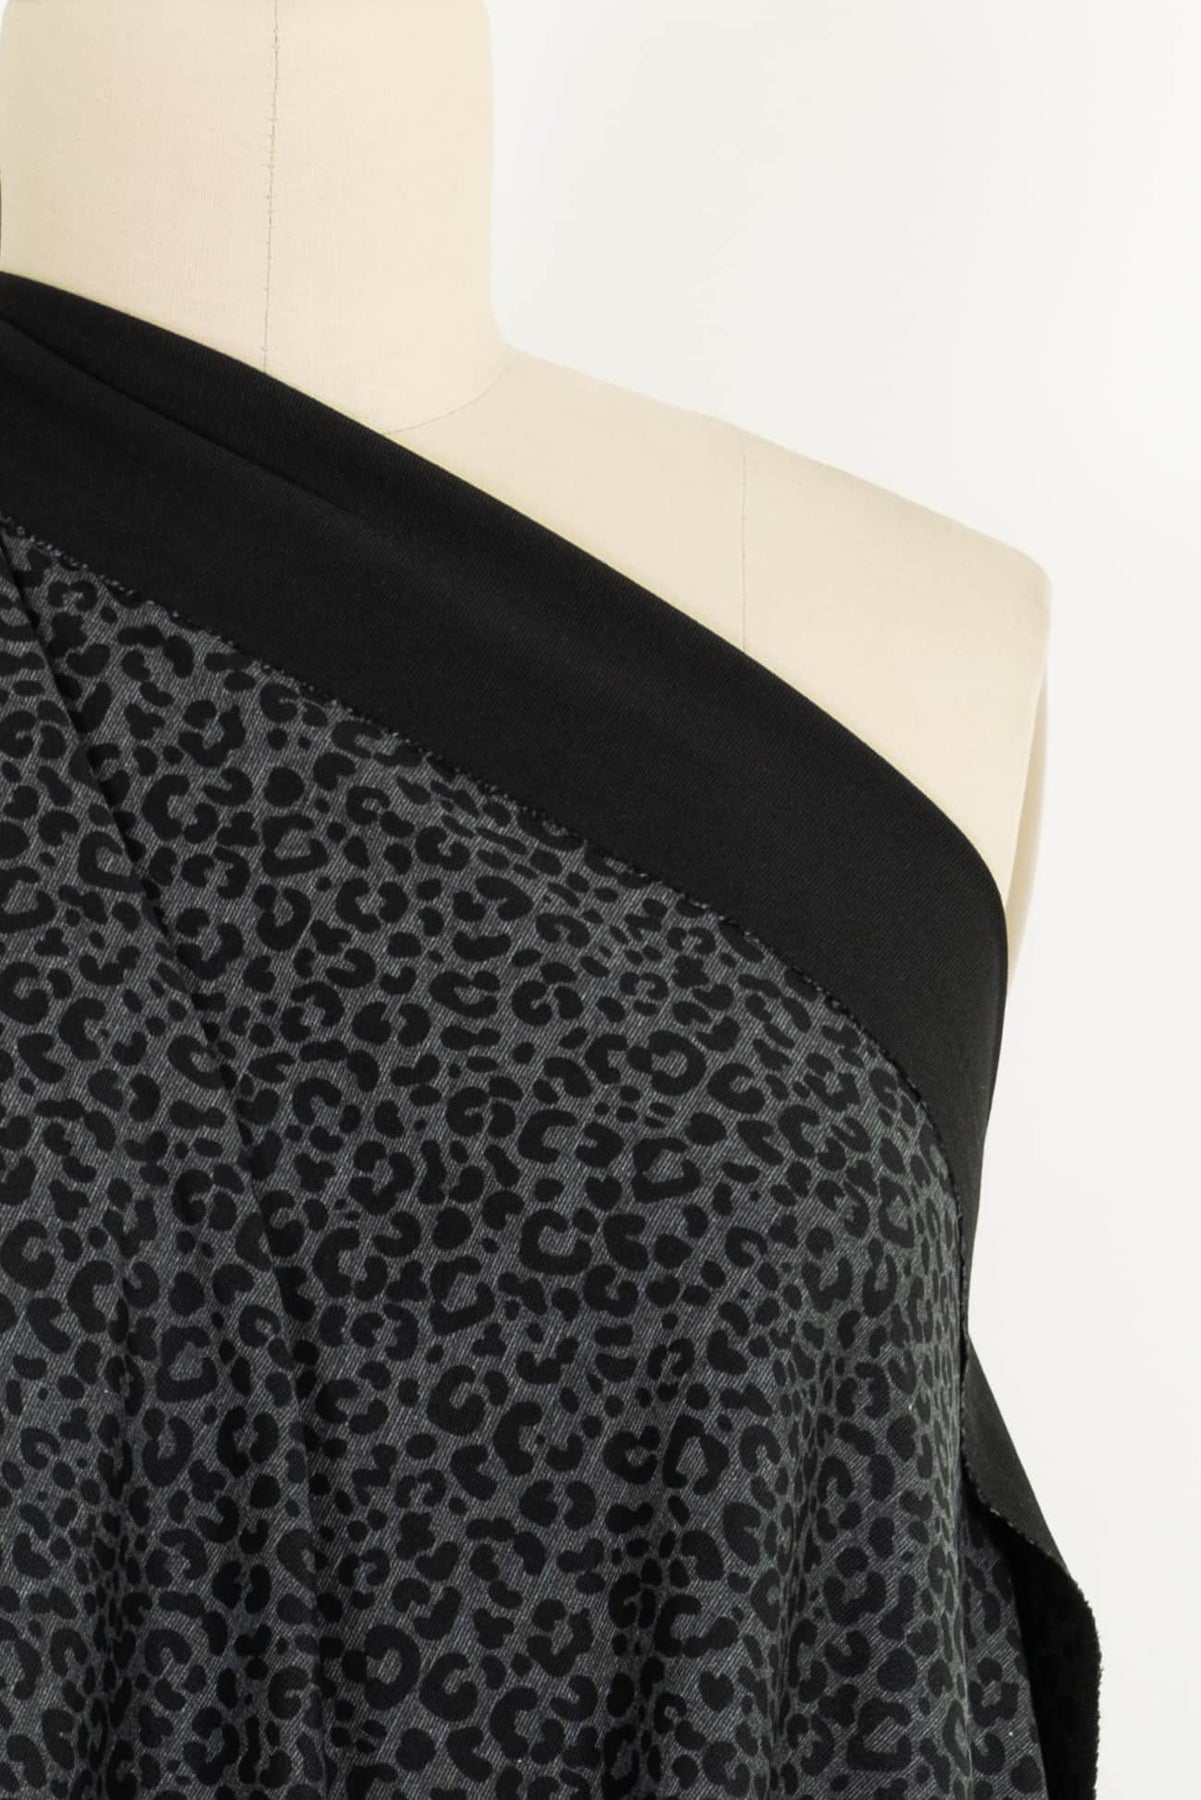 Marcy Tilton | Designer Fabrics for Fashion, Decor & More– Marcy Tilton ...